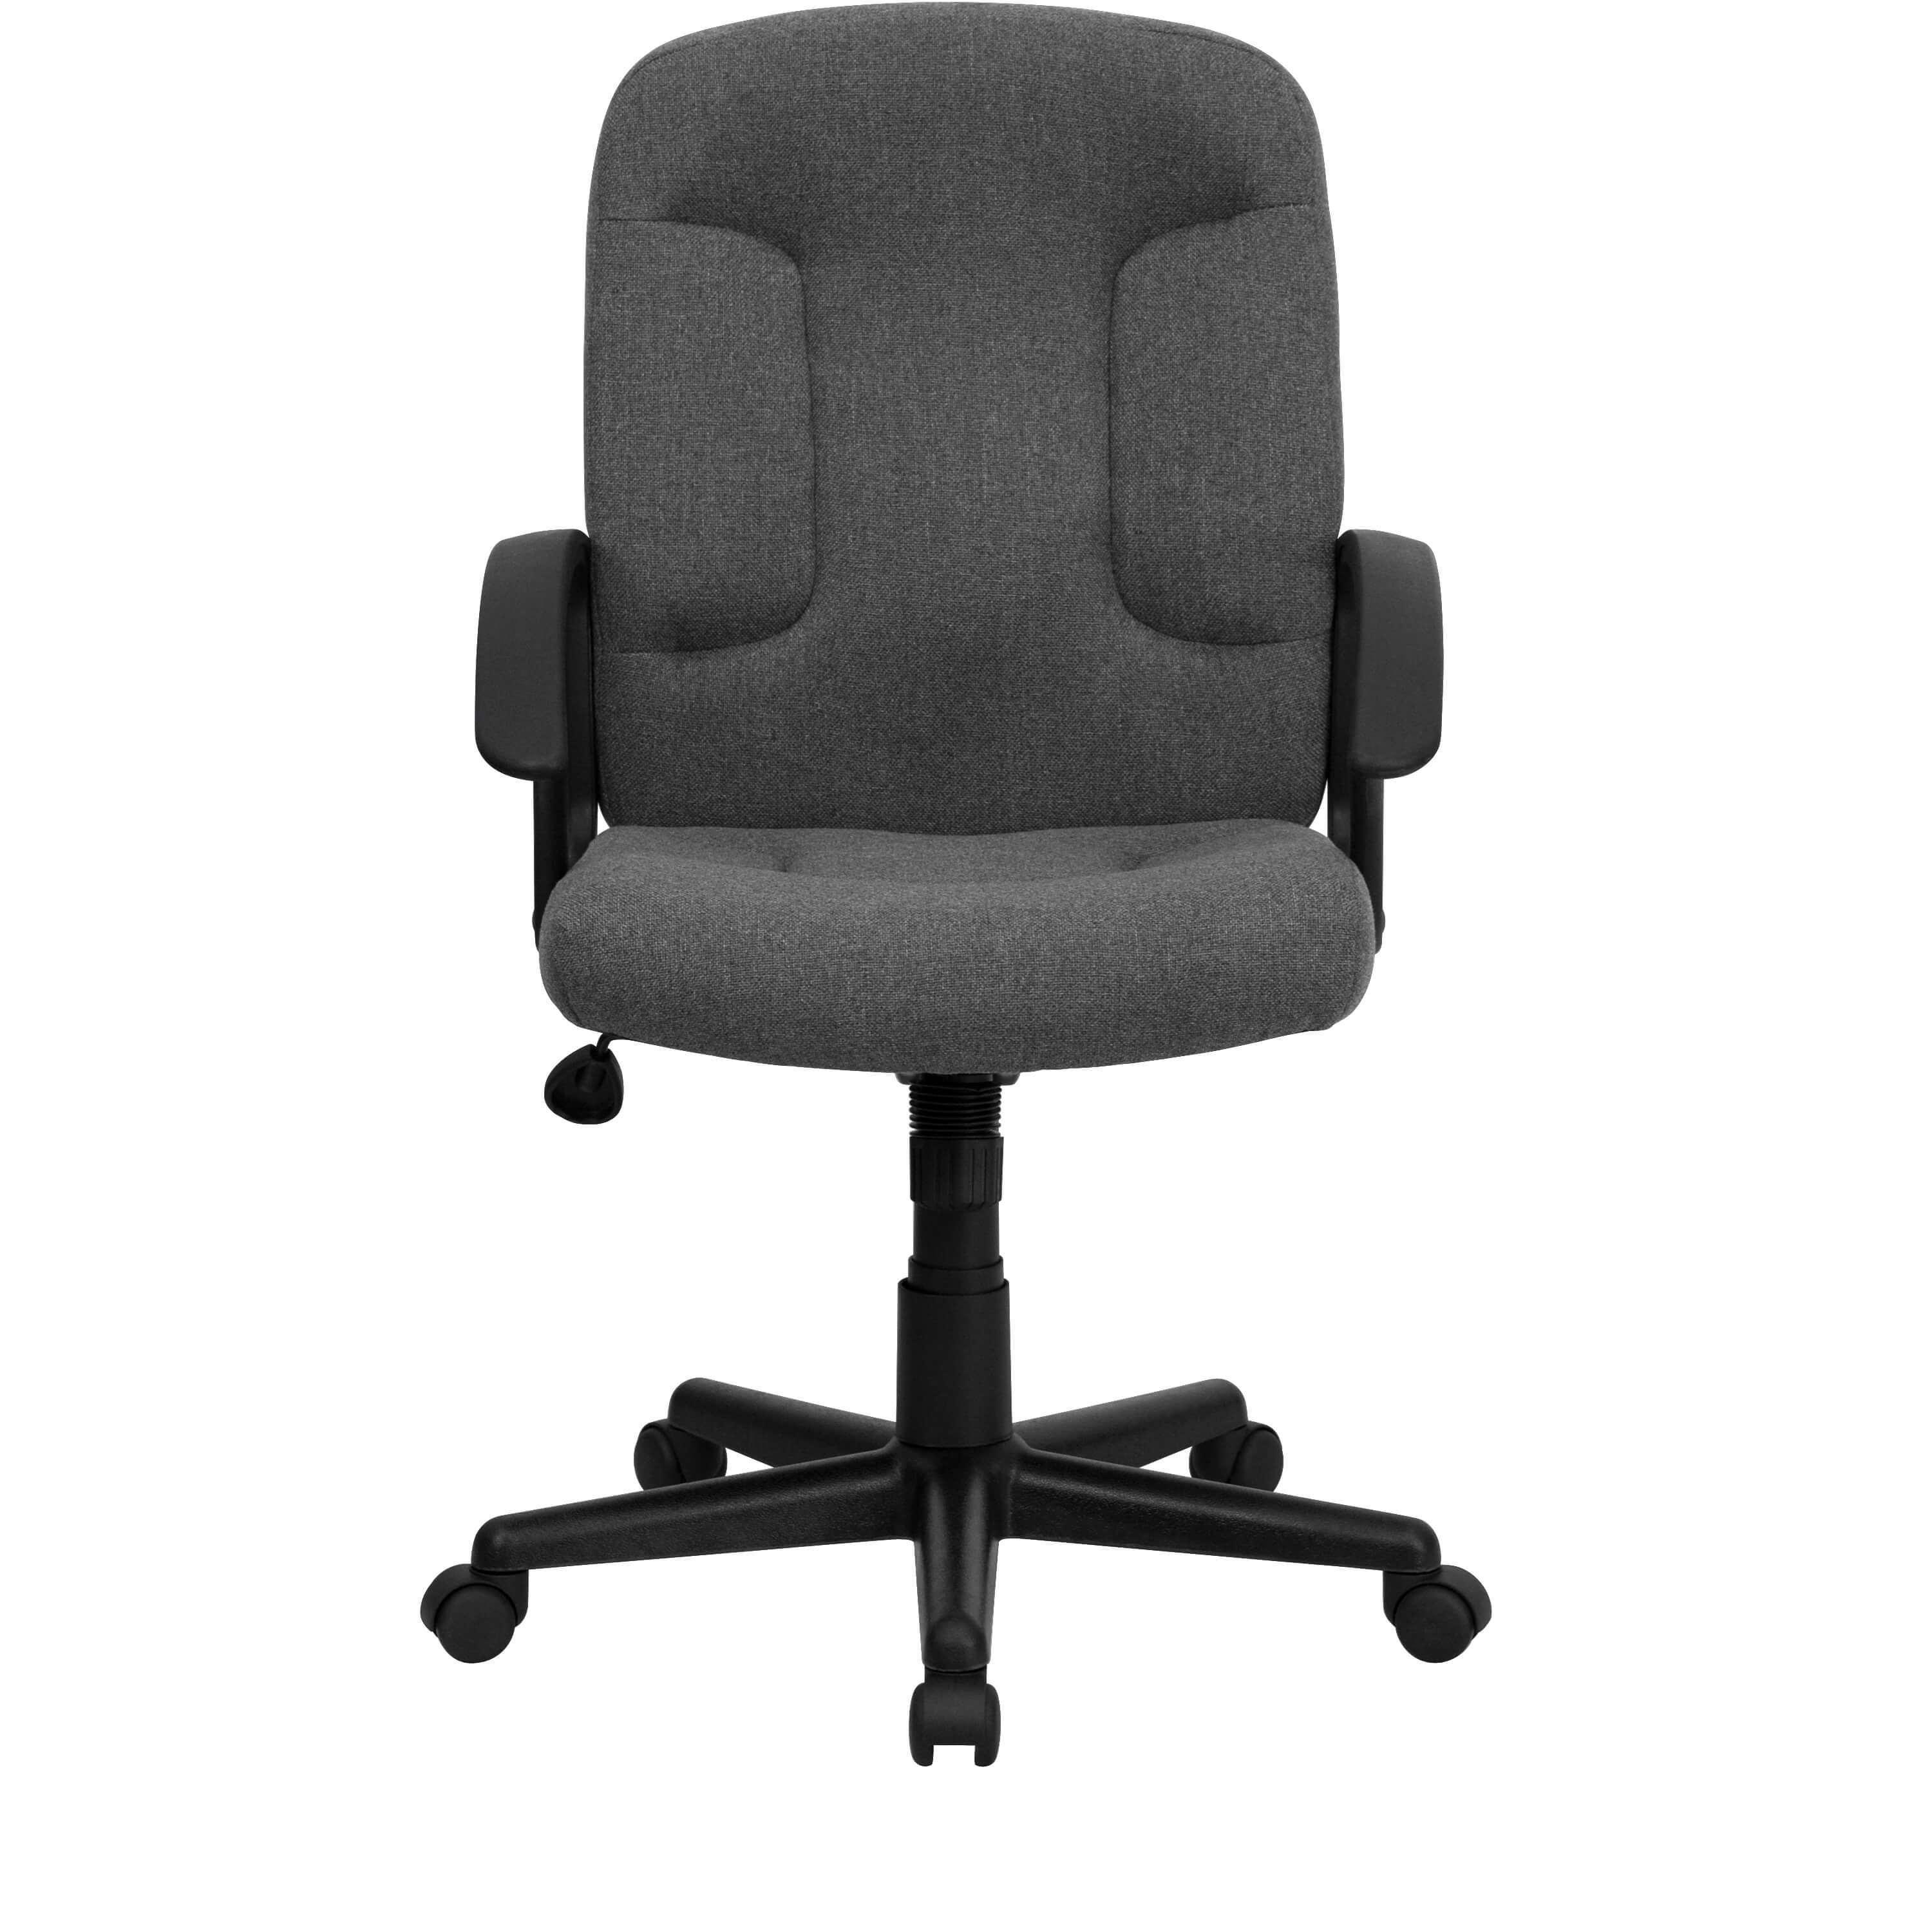 Cool desk chairs CUB GO ST 6 GY GG FLA